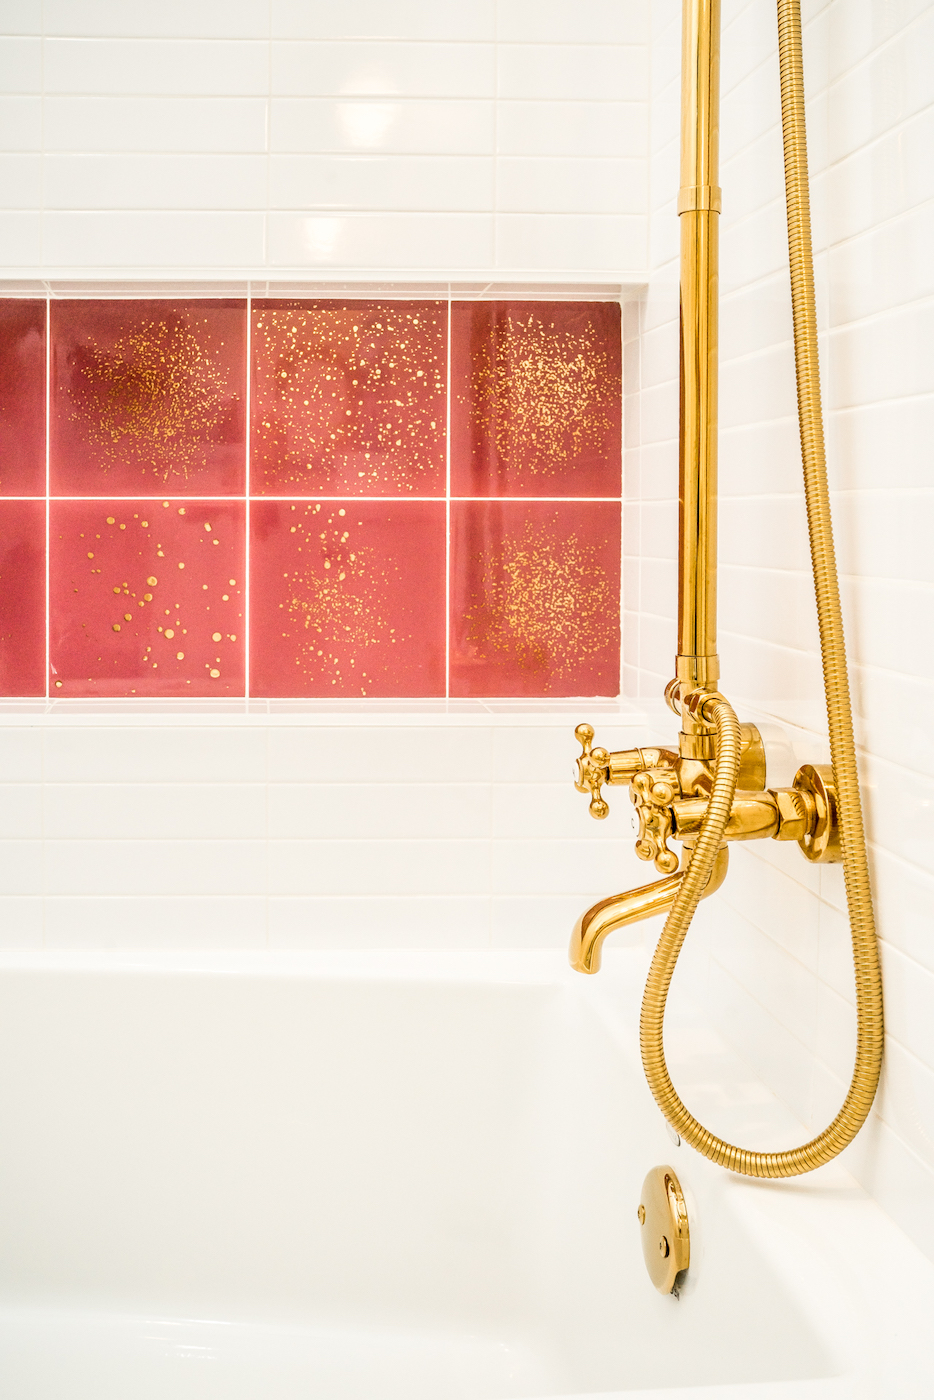 gold-shower-fixture-richardson-tx-interior-design